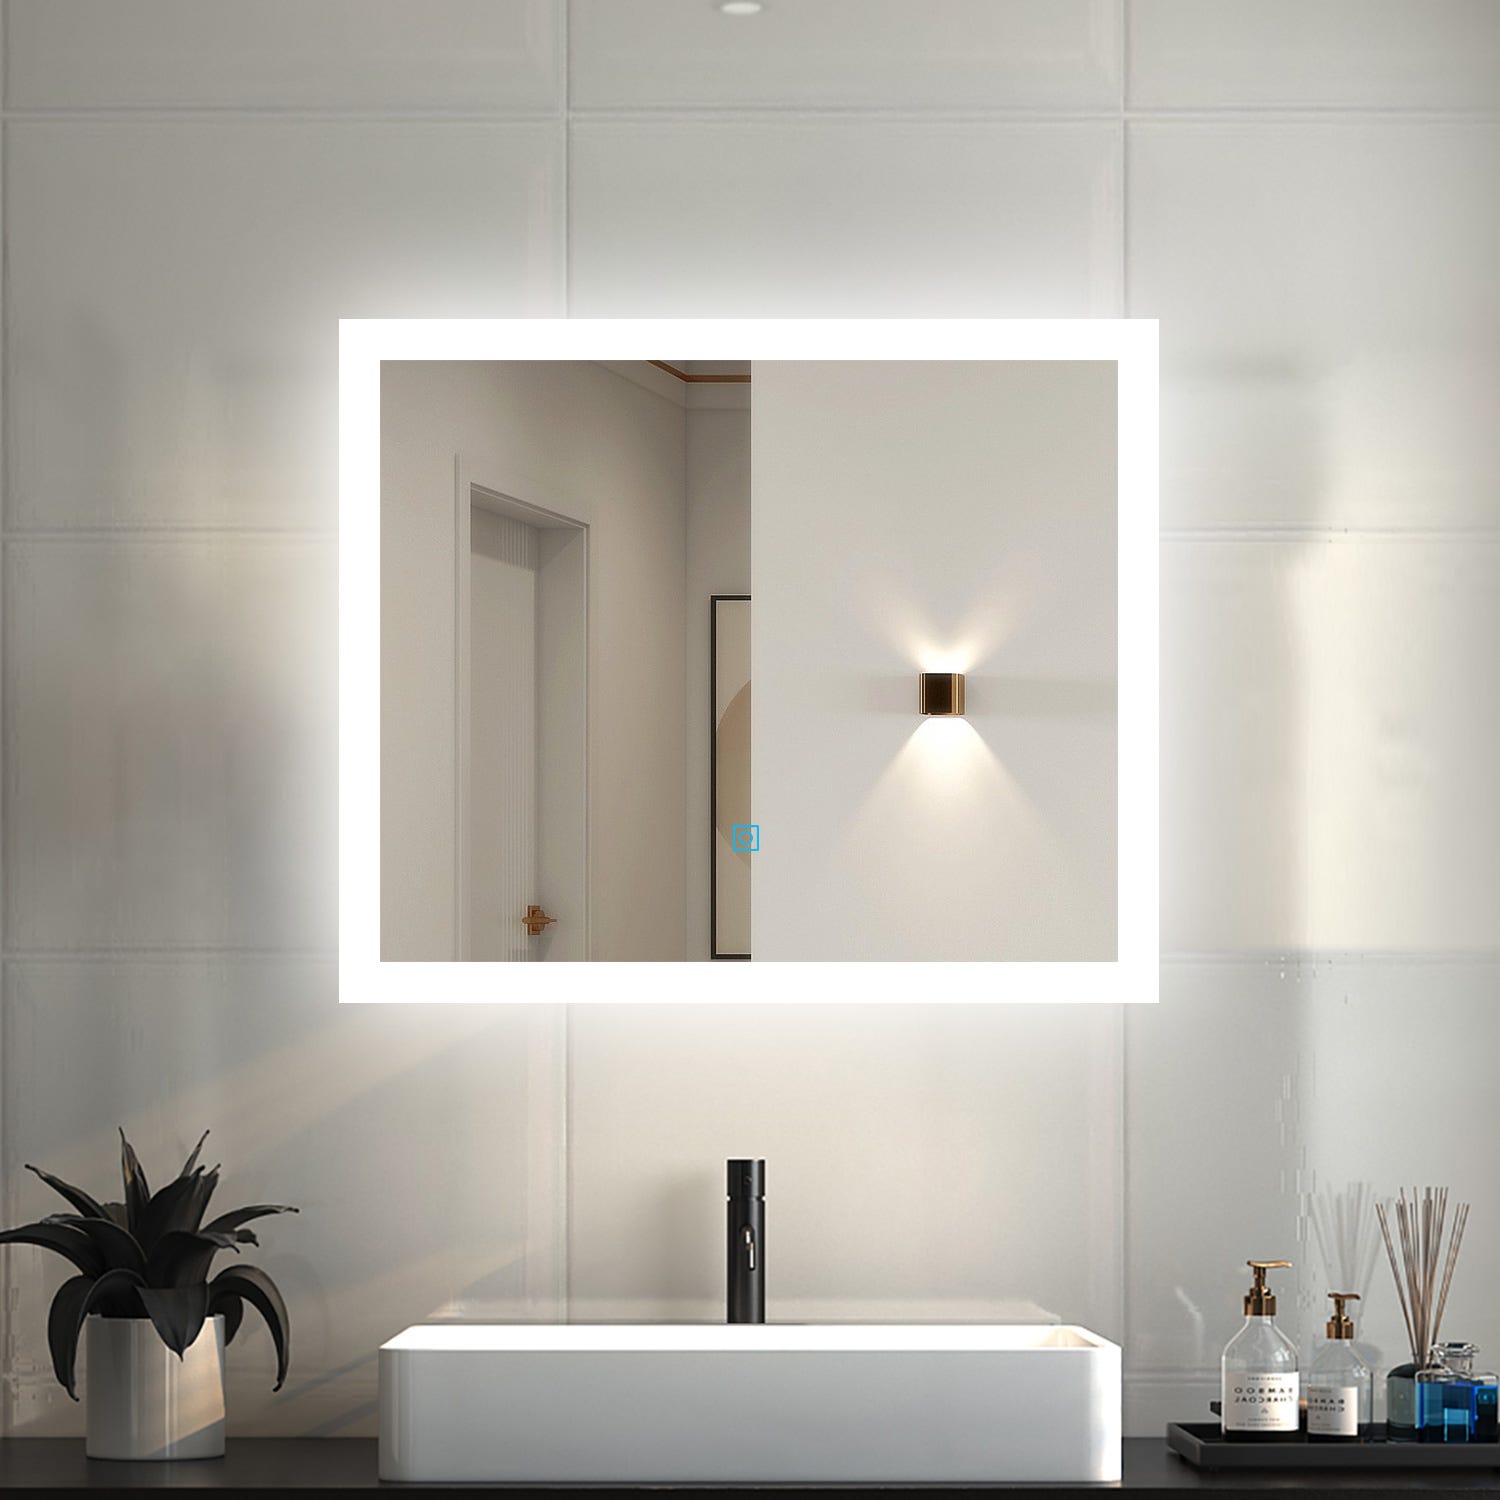 50 x 60 cm Esoejo led baño antivaho, luz blanca frío, sensor táctil